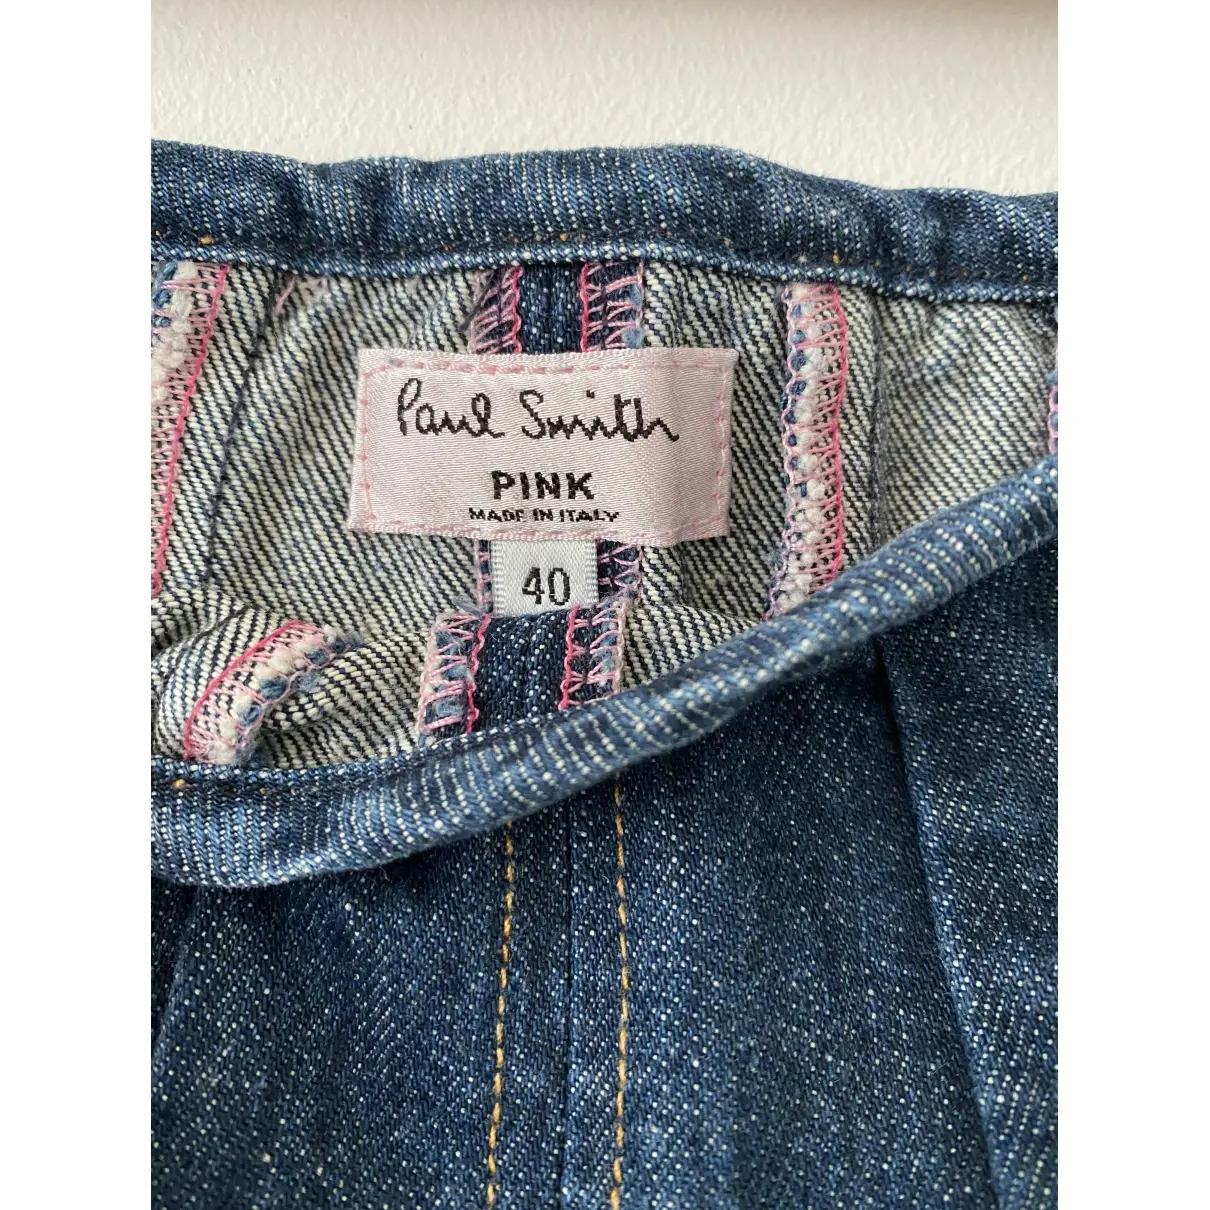 Buy Paul Smith Skirt online - Vintage